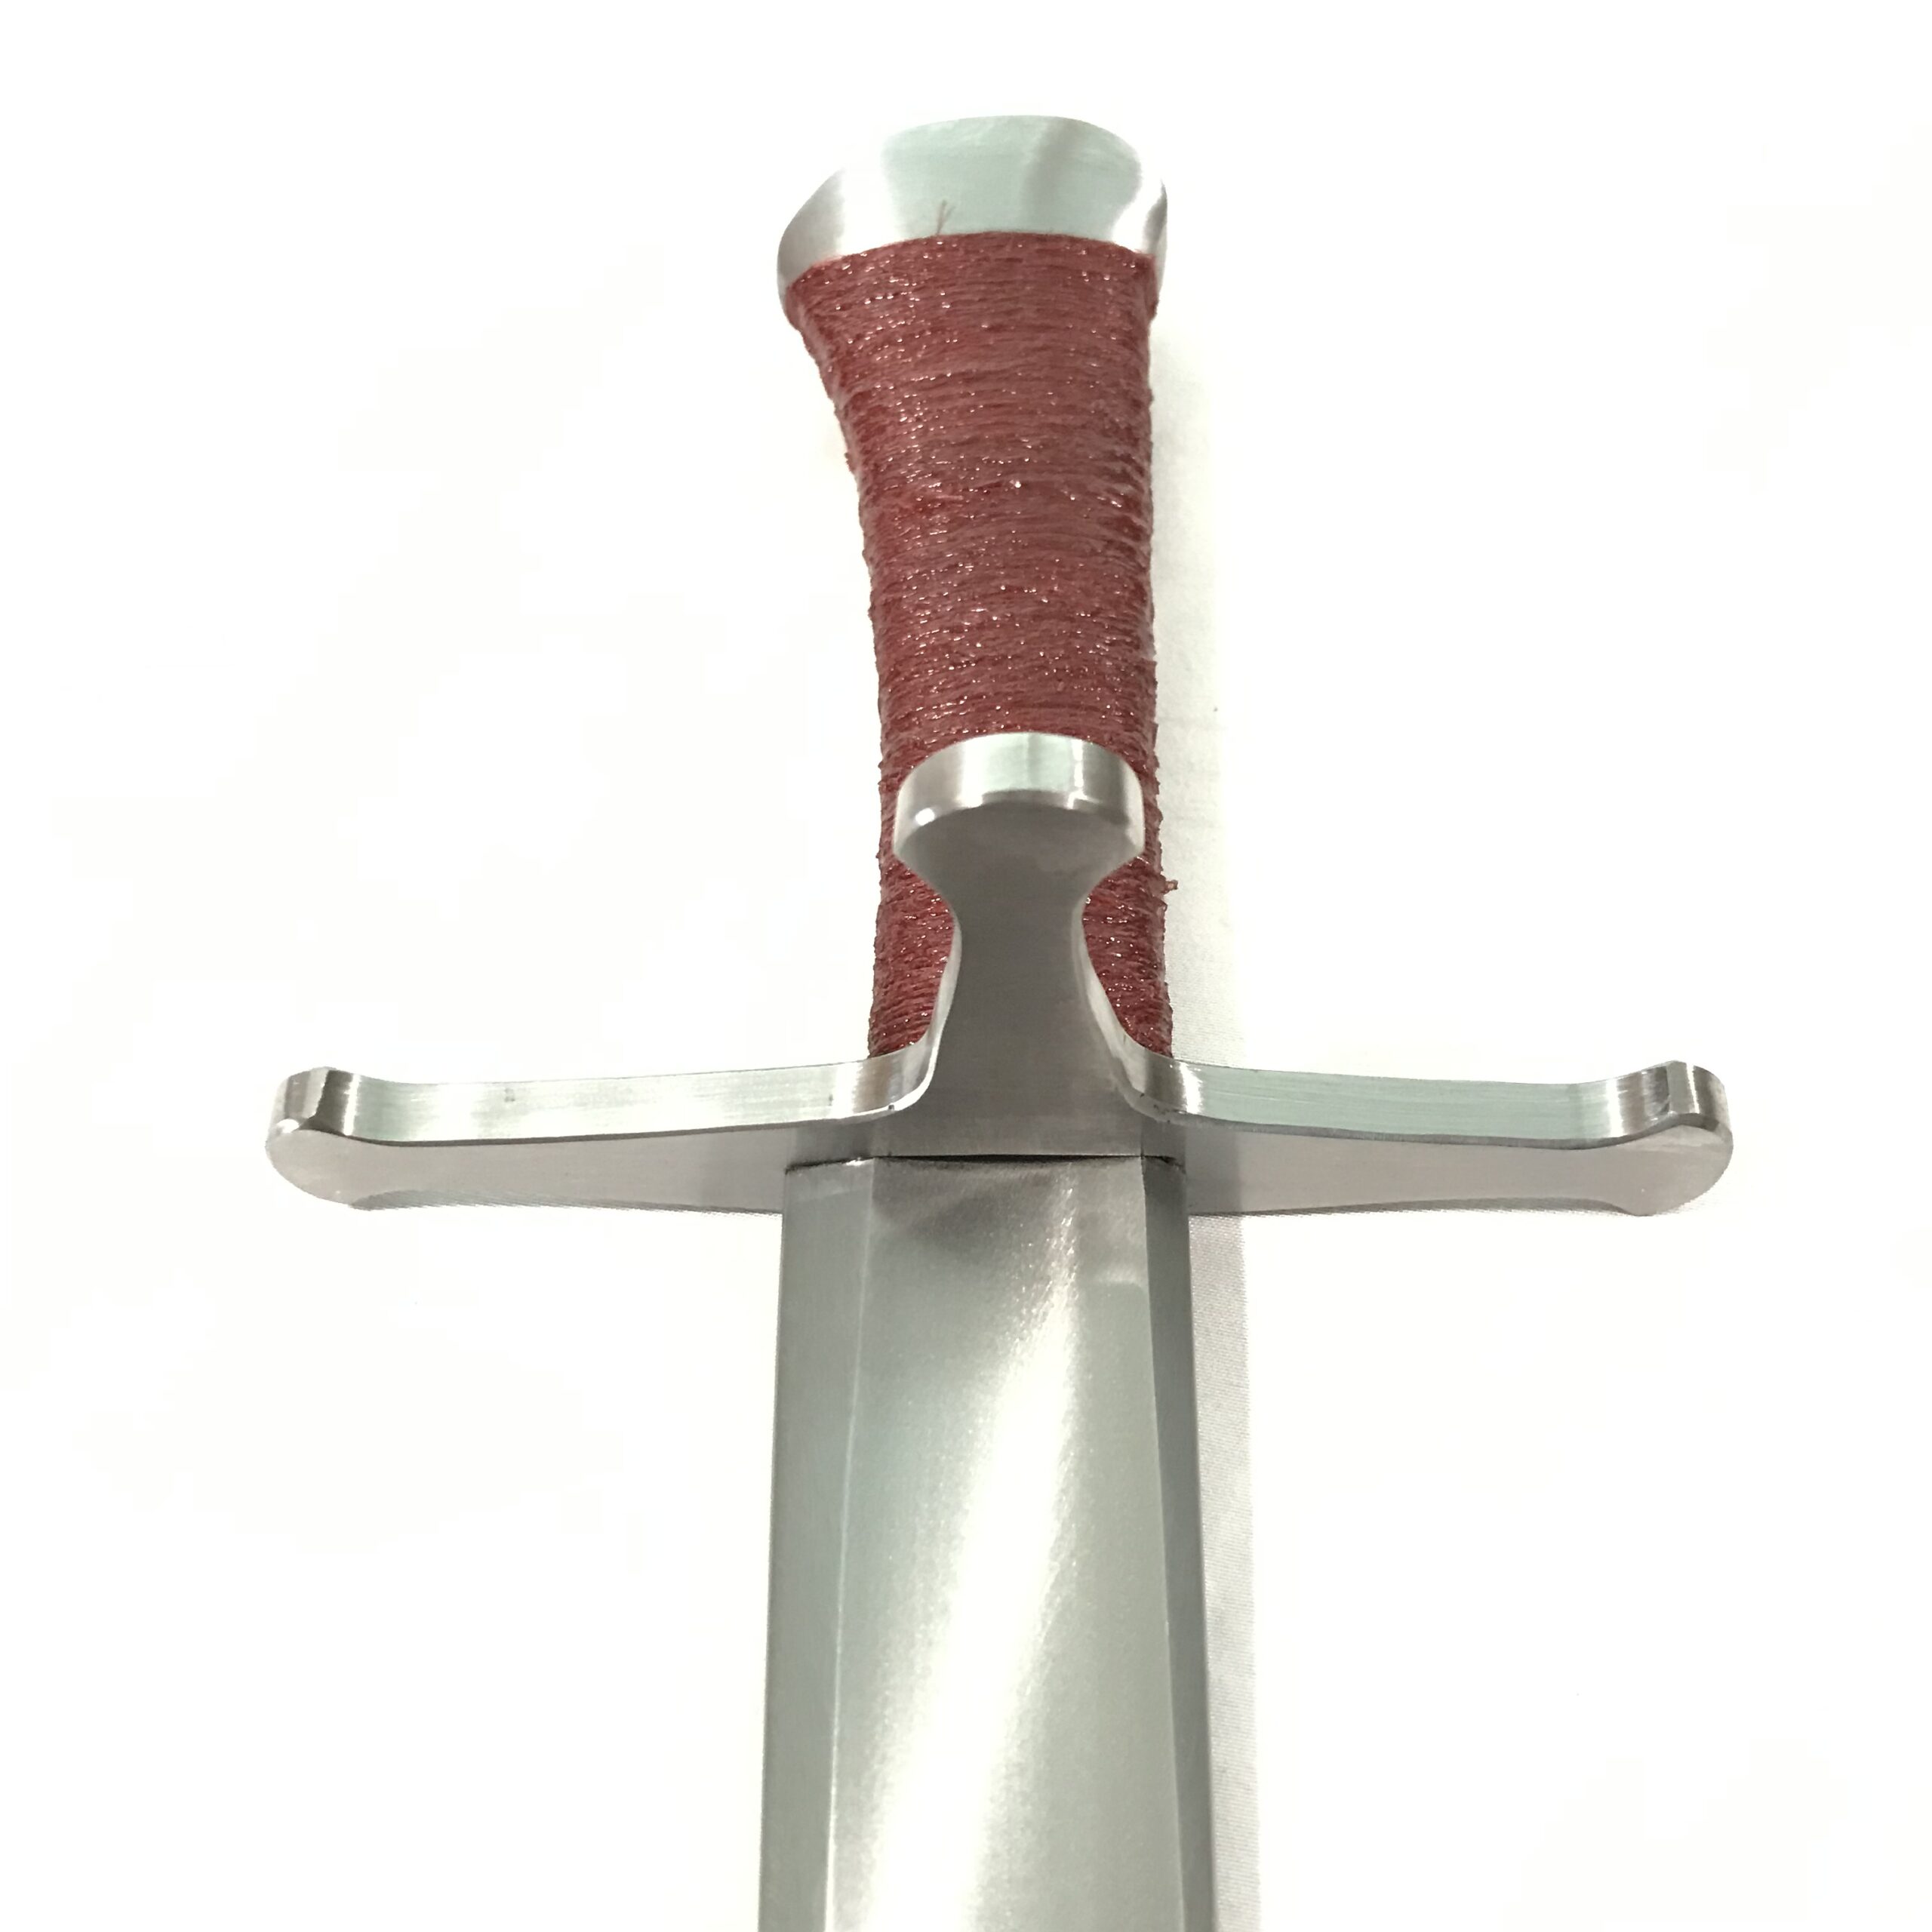 Chlebowski Langes Messer Red (7)